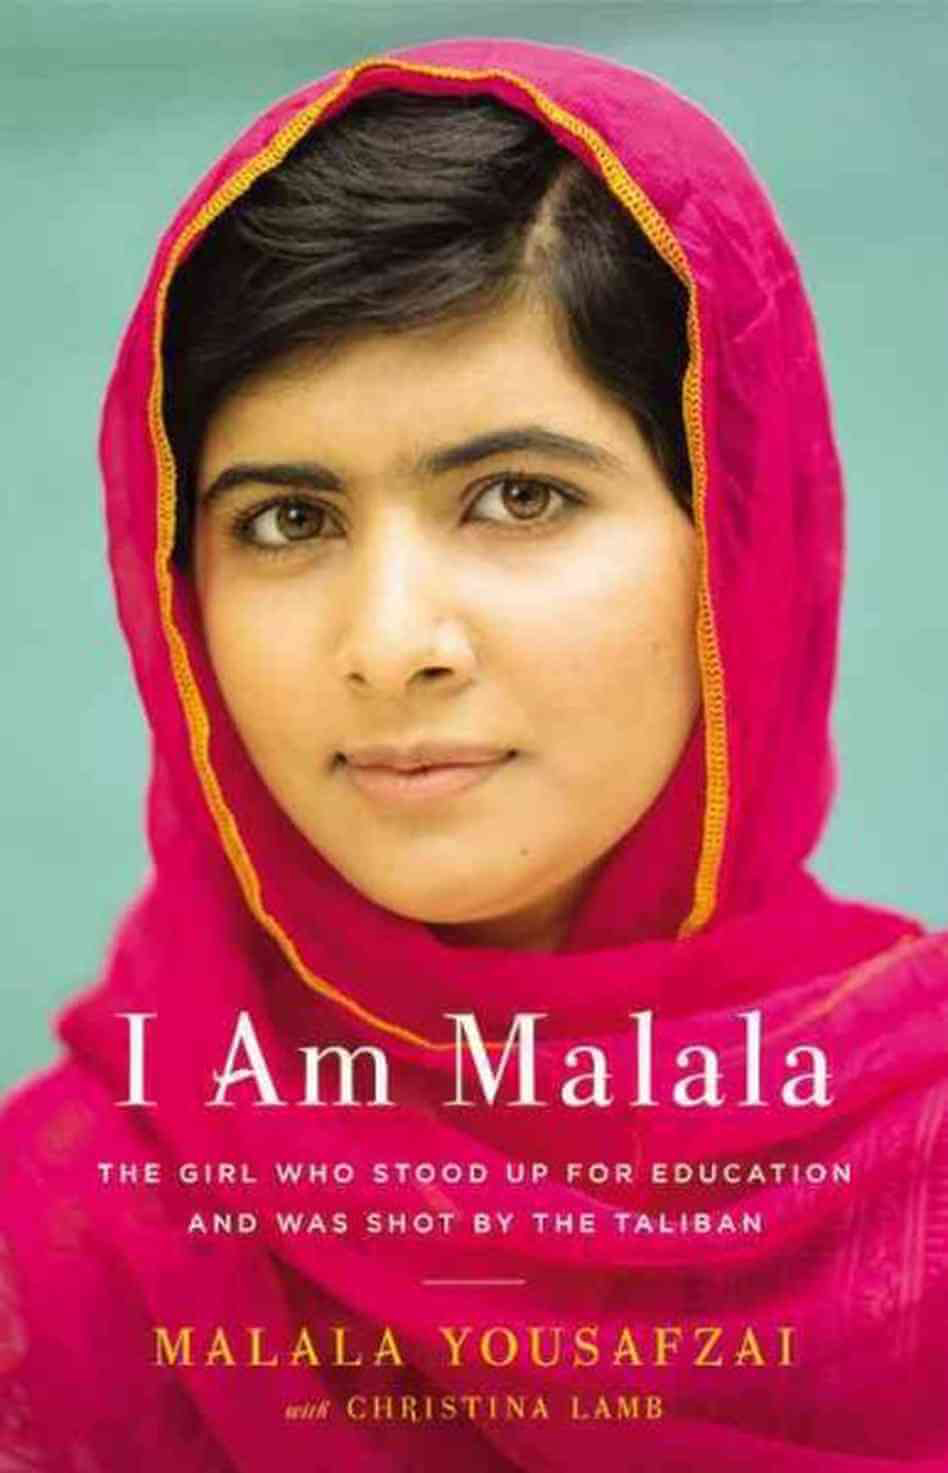 Members of the Pakistani Taliban make a failed attempt to assassinate an outspoken schoolgirl, Malala Yousafzai.